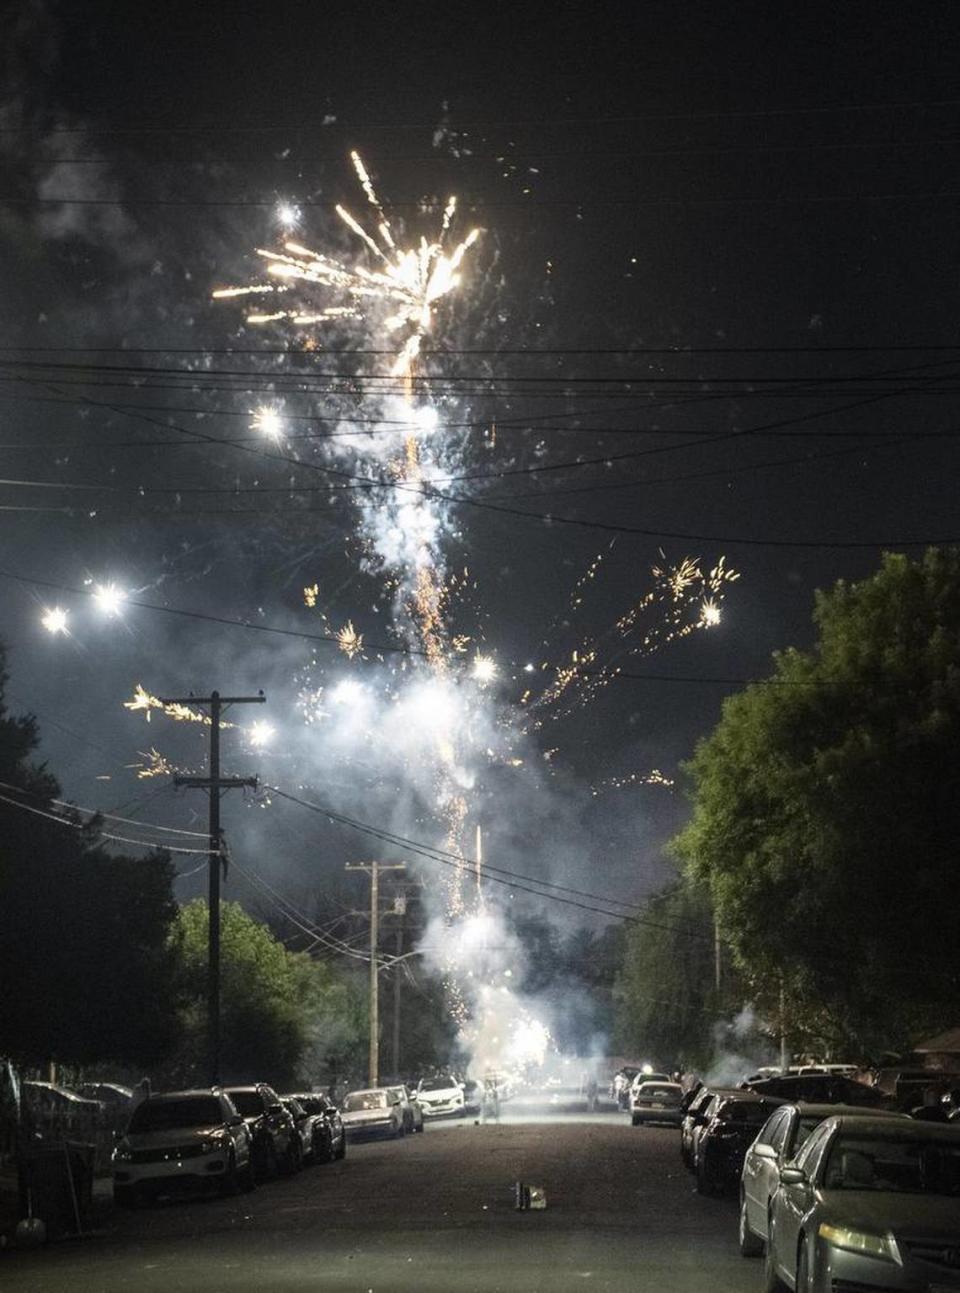 Illegal fireworks light up the street in Modesto Calif., Thursday, July 4, 2019. Andy Alfaro/aalfaro@modbee.com